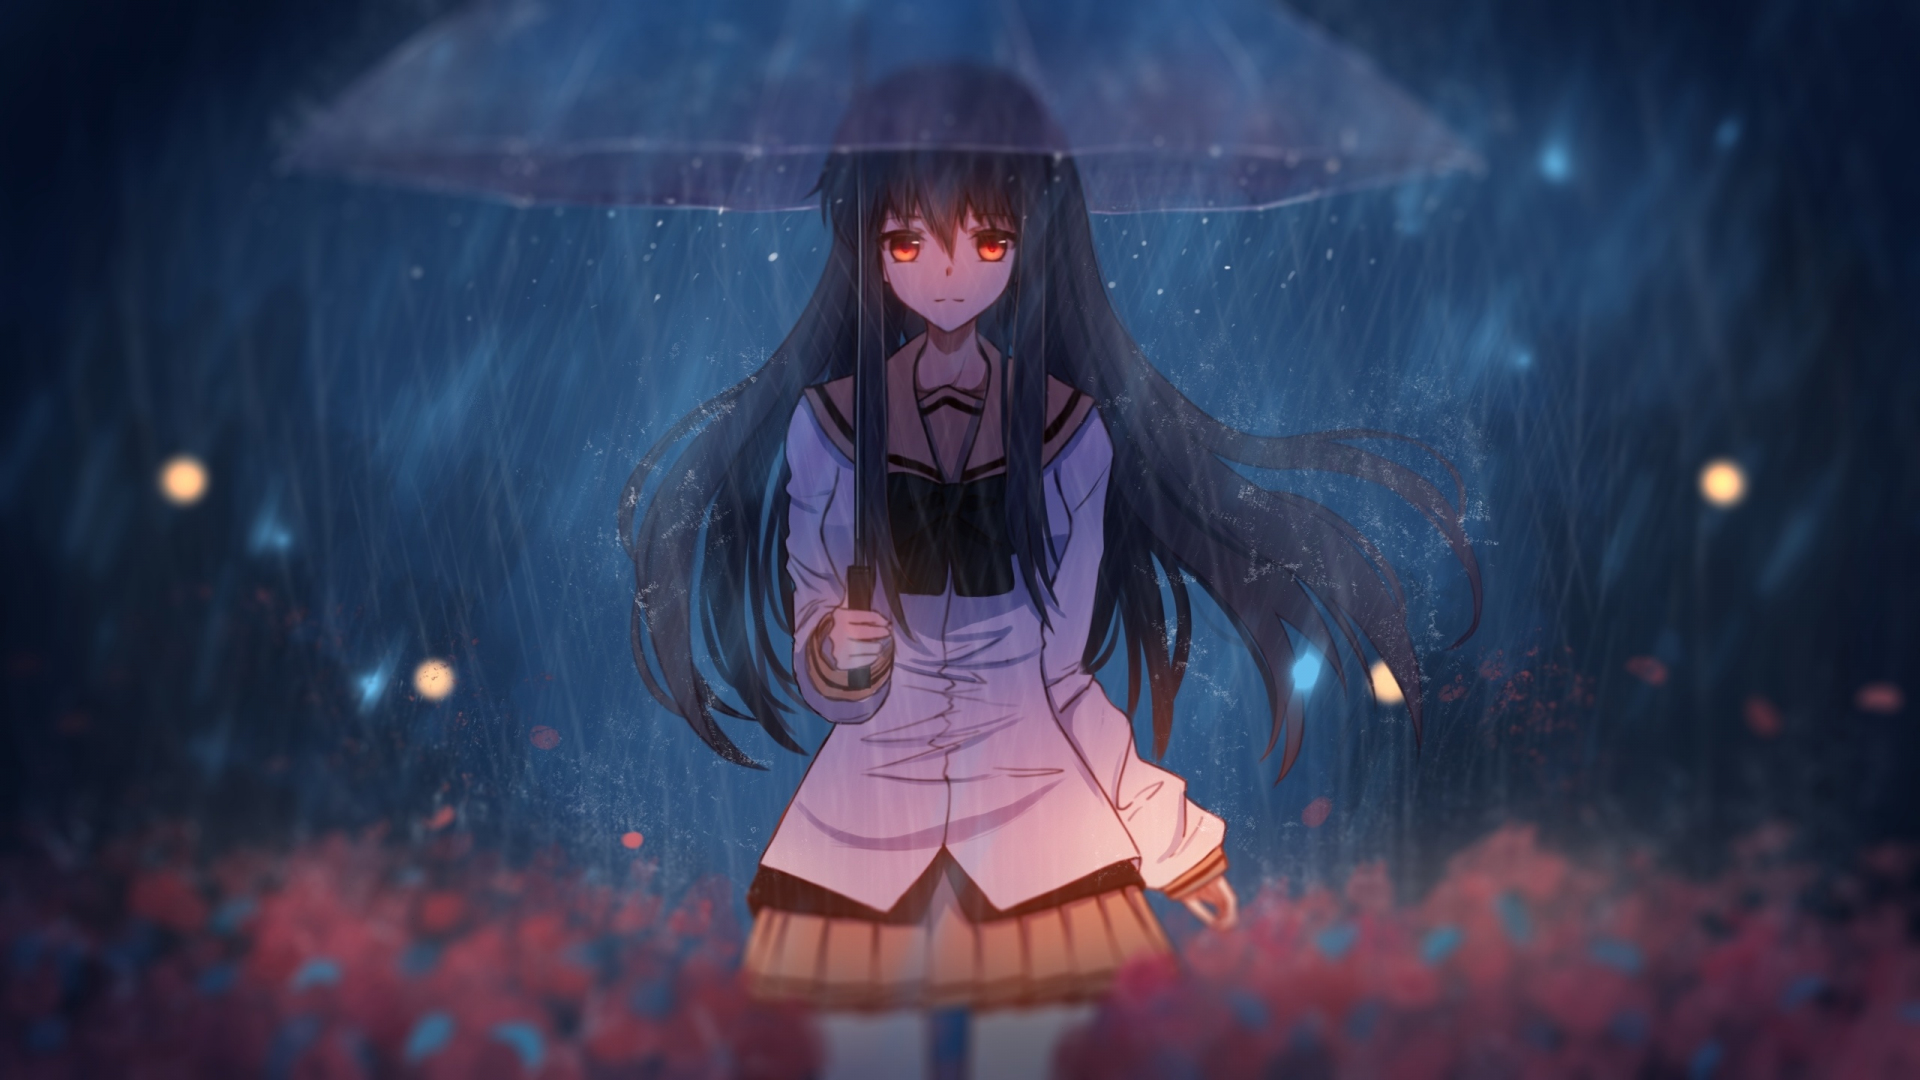 Download anime girl in rain, with umbrella, art 1920x1080 wallpaper